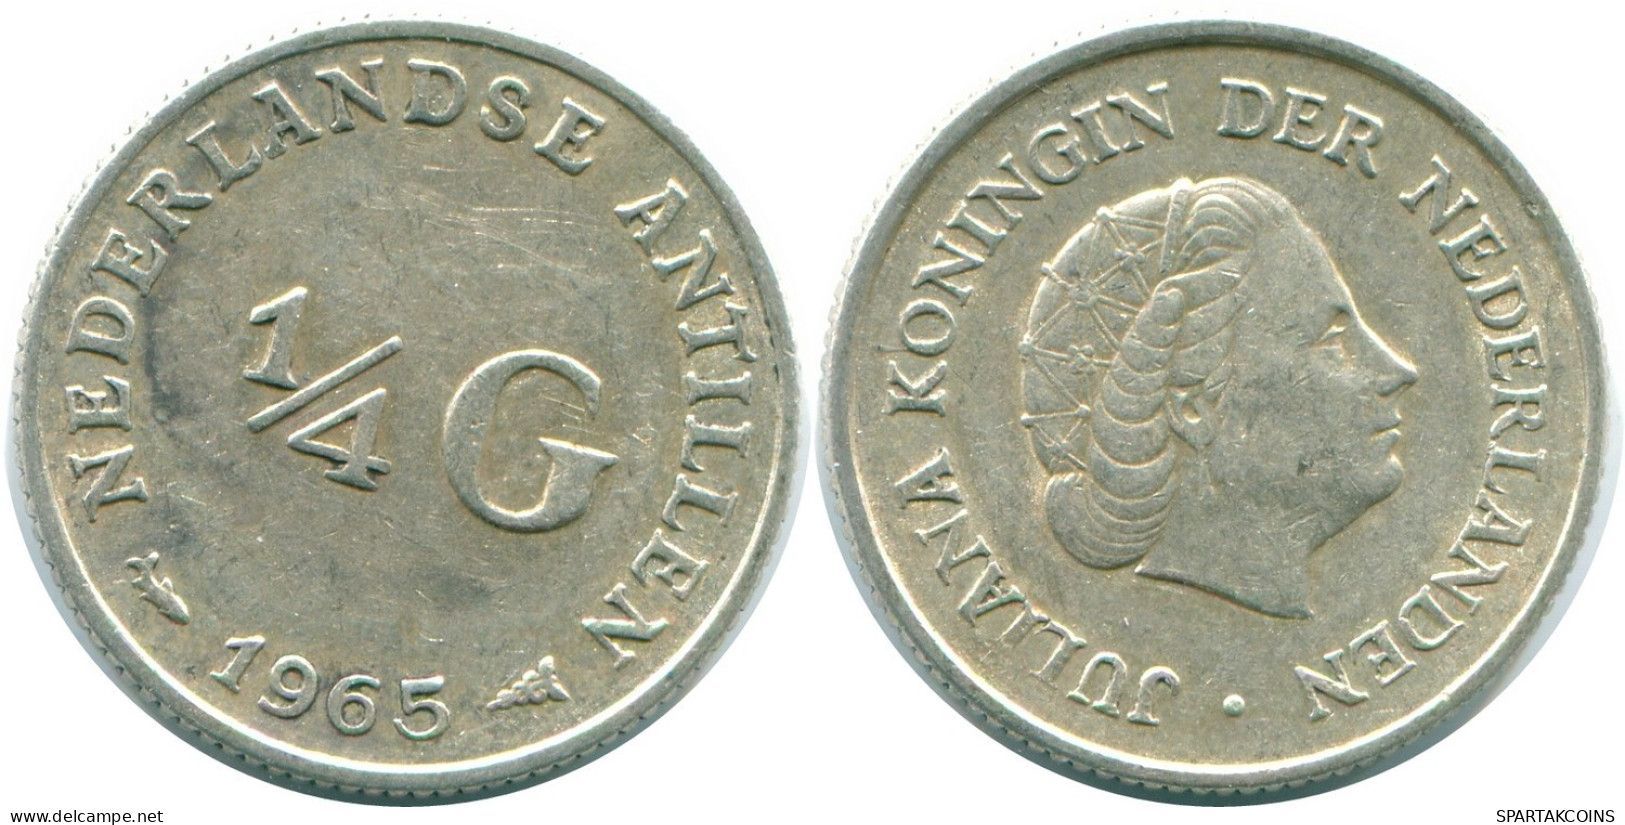 1/4 GULDEN 1965 NETHERLANDS ANTILLES SILVER Colonial Coin #NL11284.4.U.A - Antilles Néerlandaises